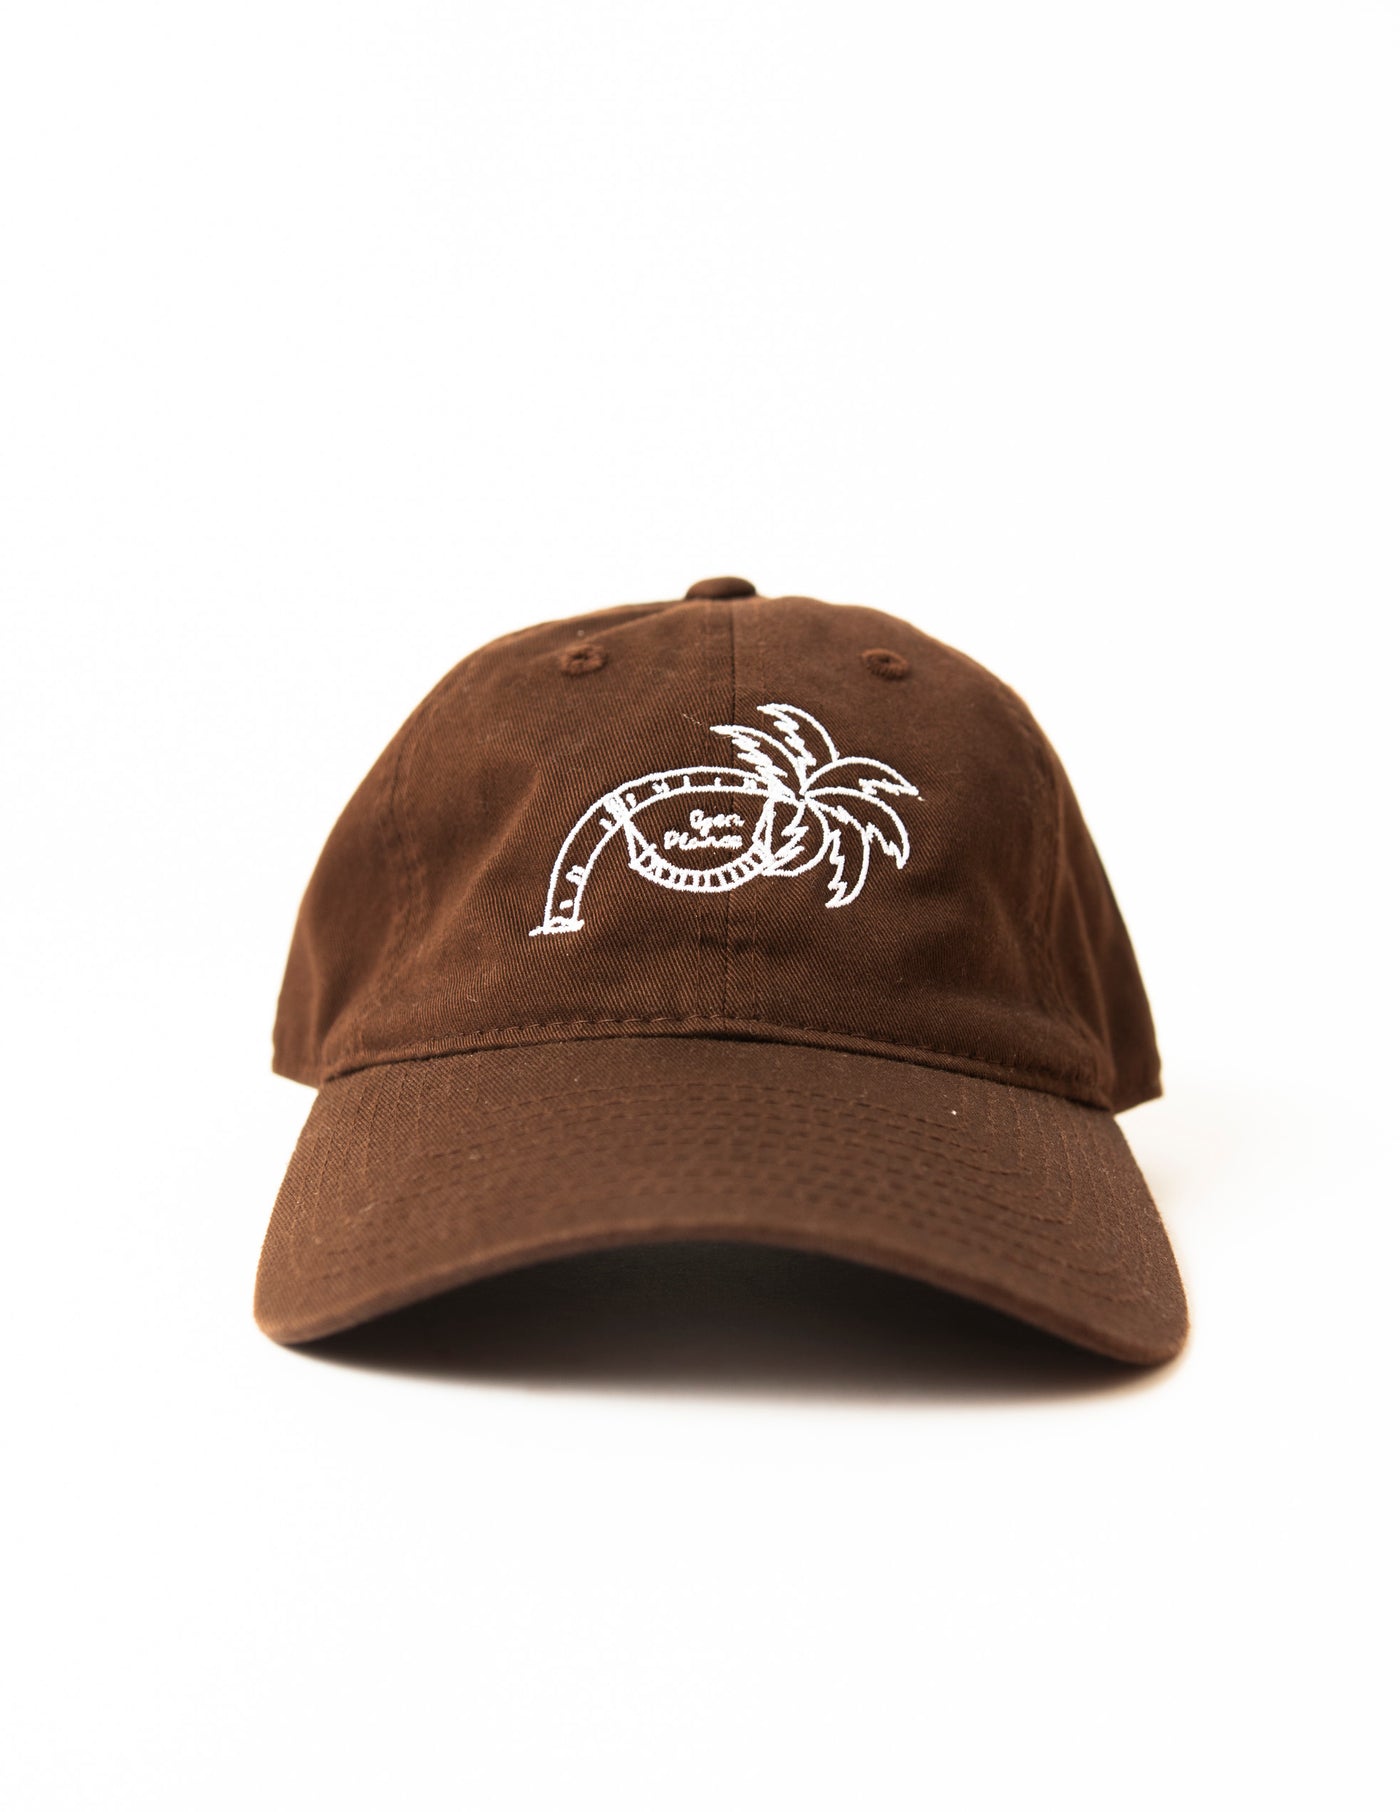 Palm Hat - Mountain Brown